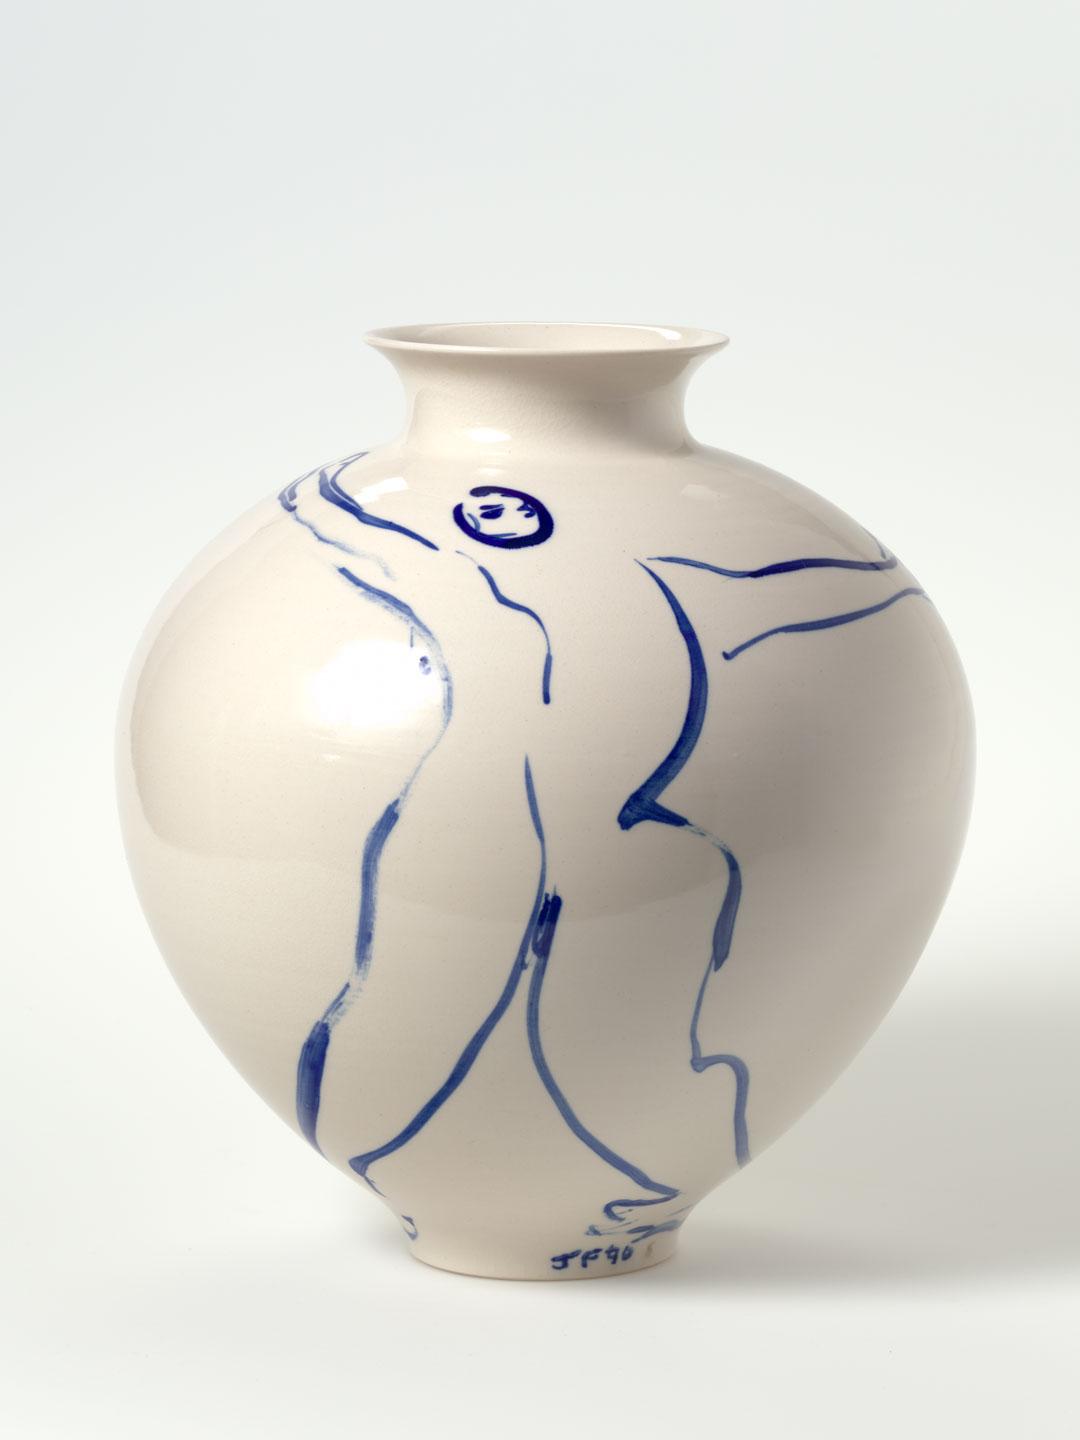 Artwork Figure this artwork made of Stoneware, white clay, wheelthrown with cobalt brushwork under clear glaze